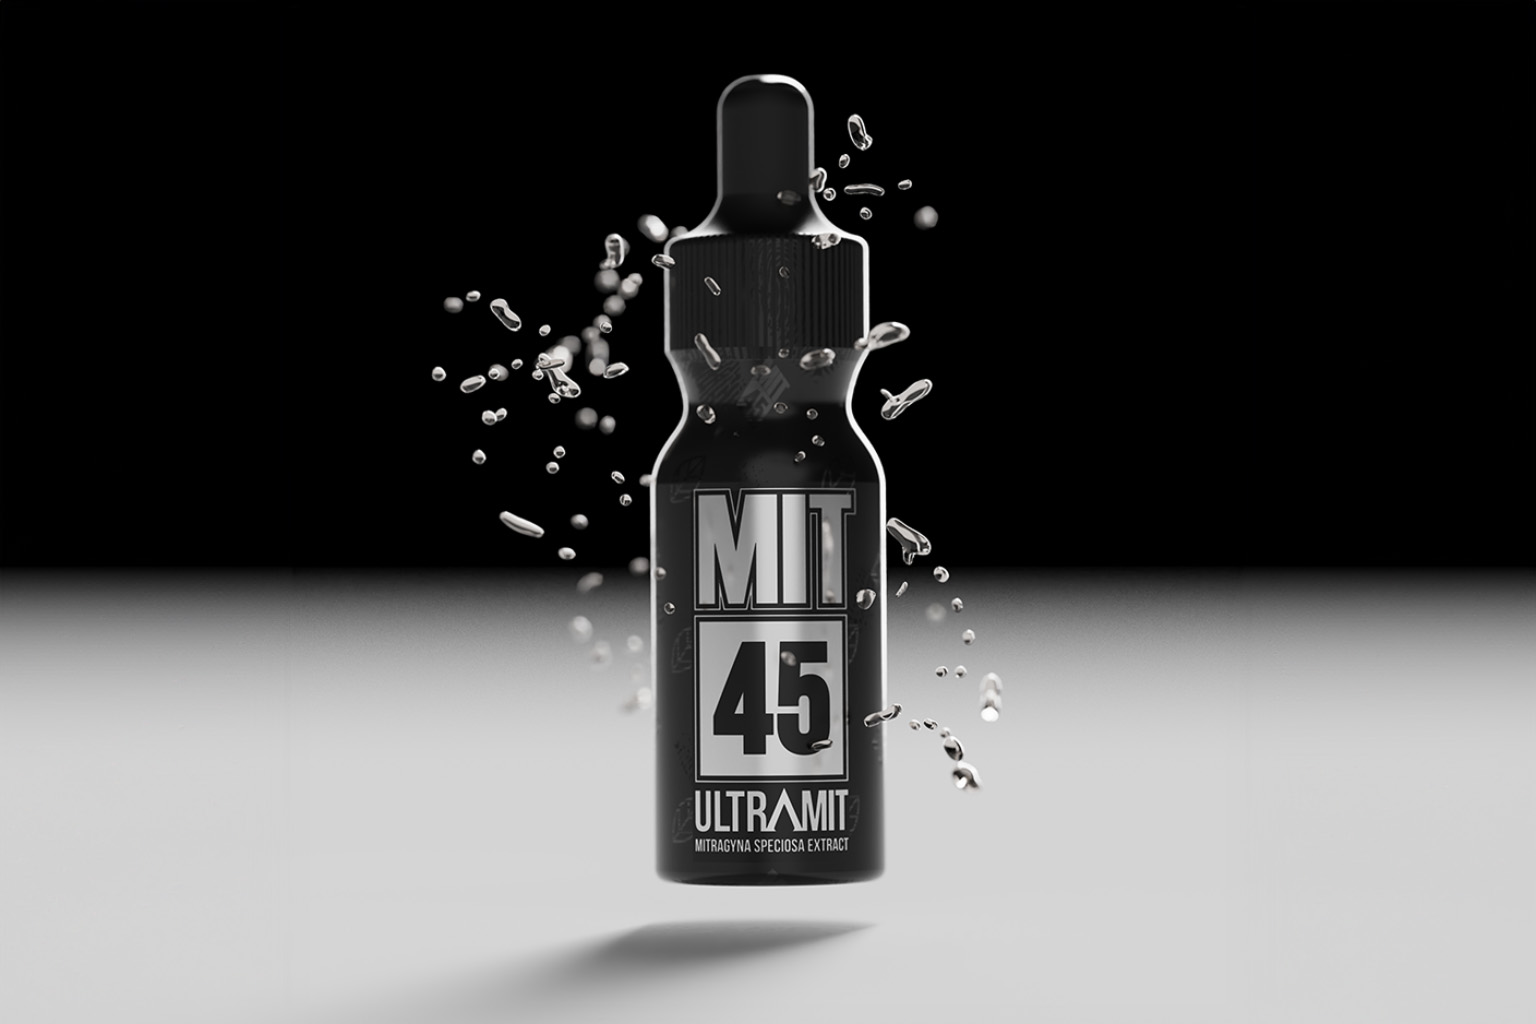 UltraMIT product image